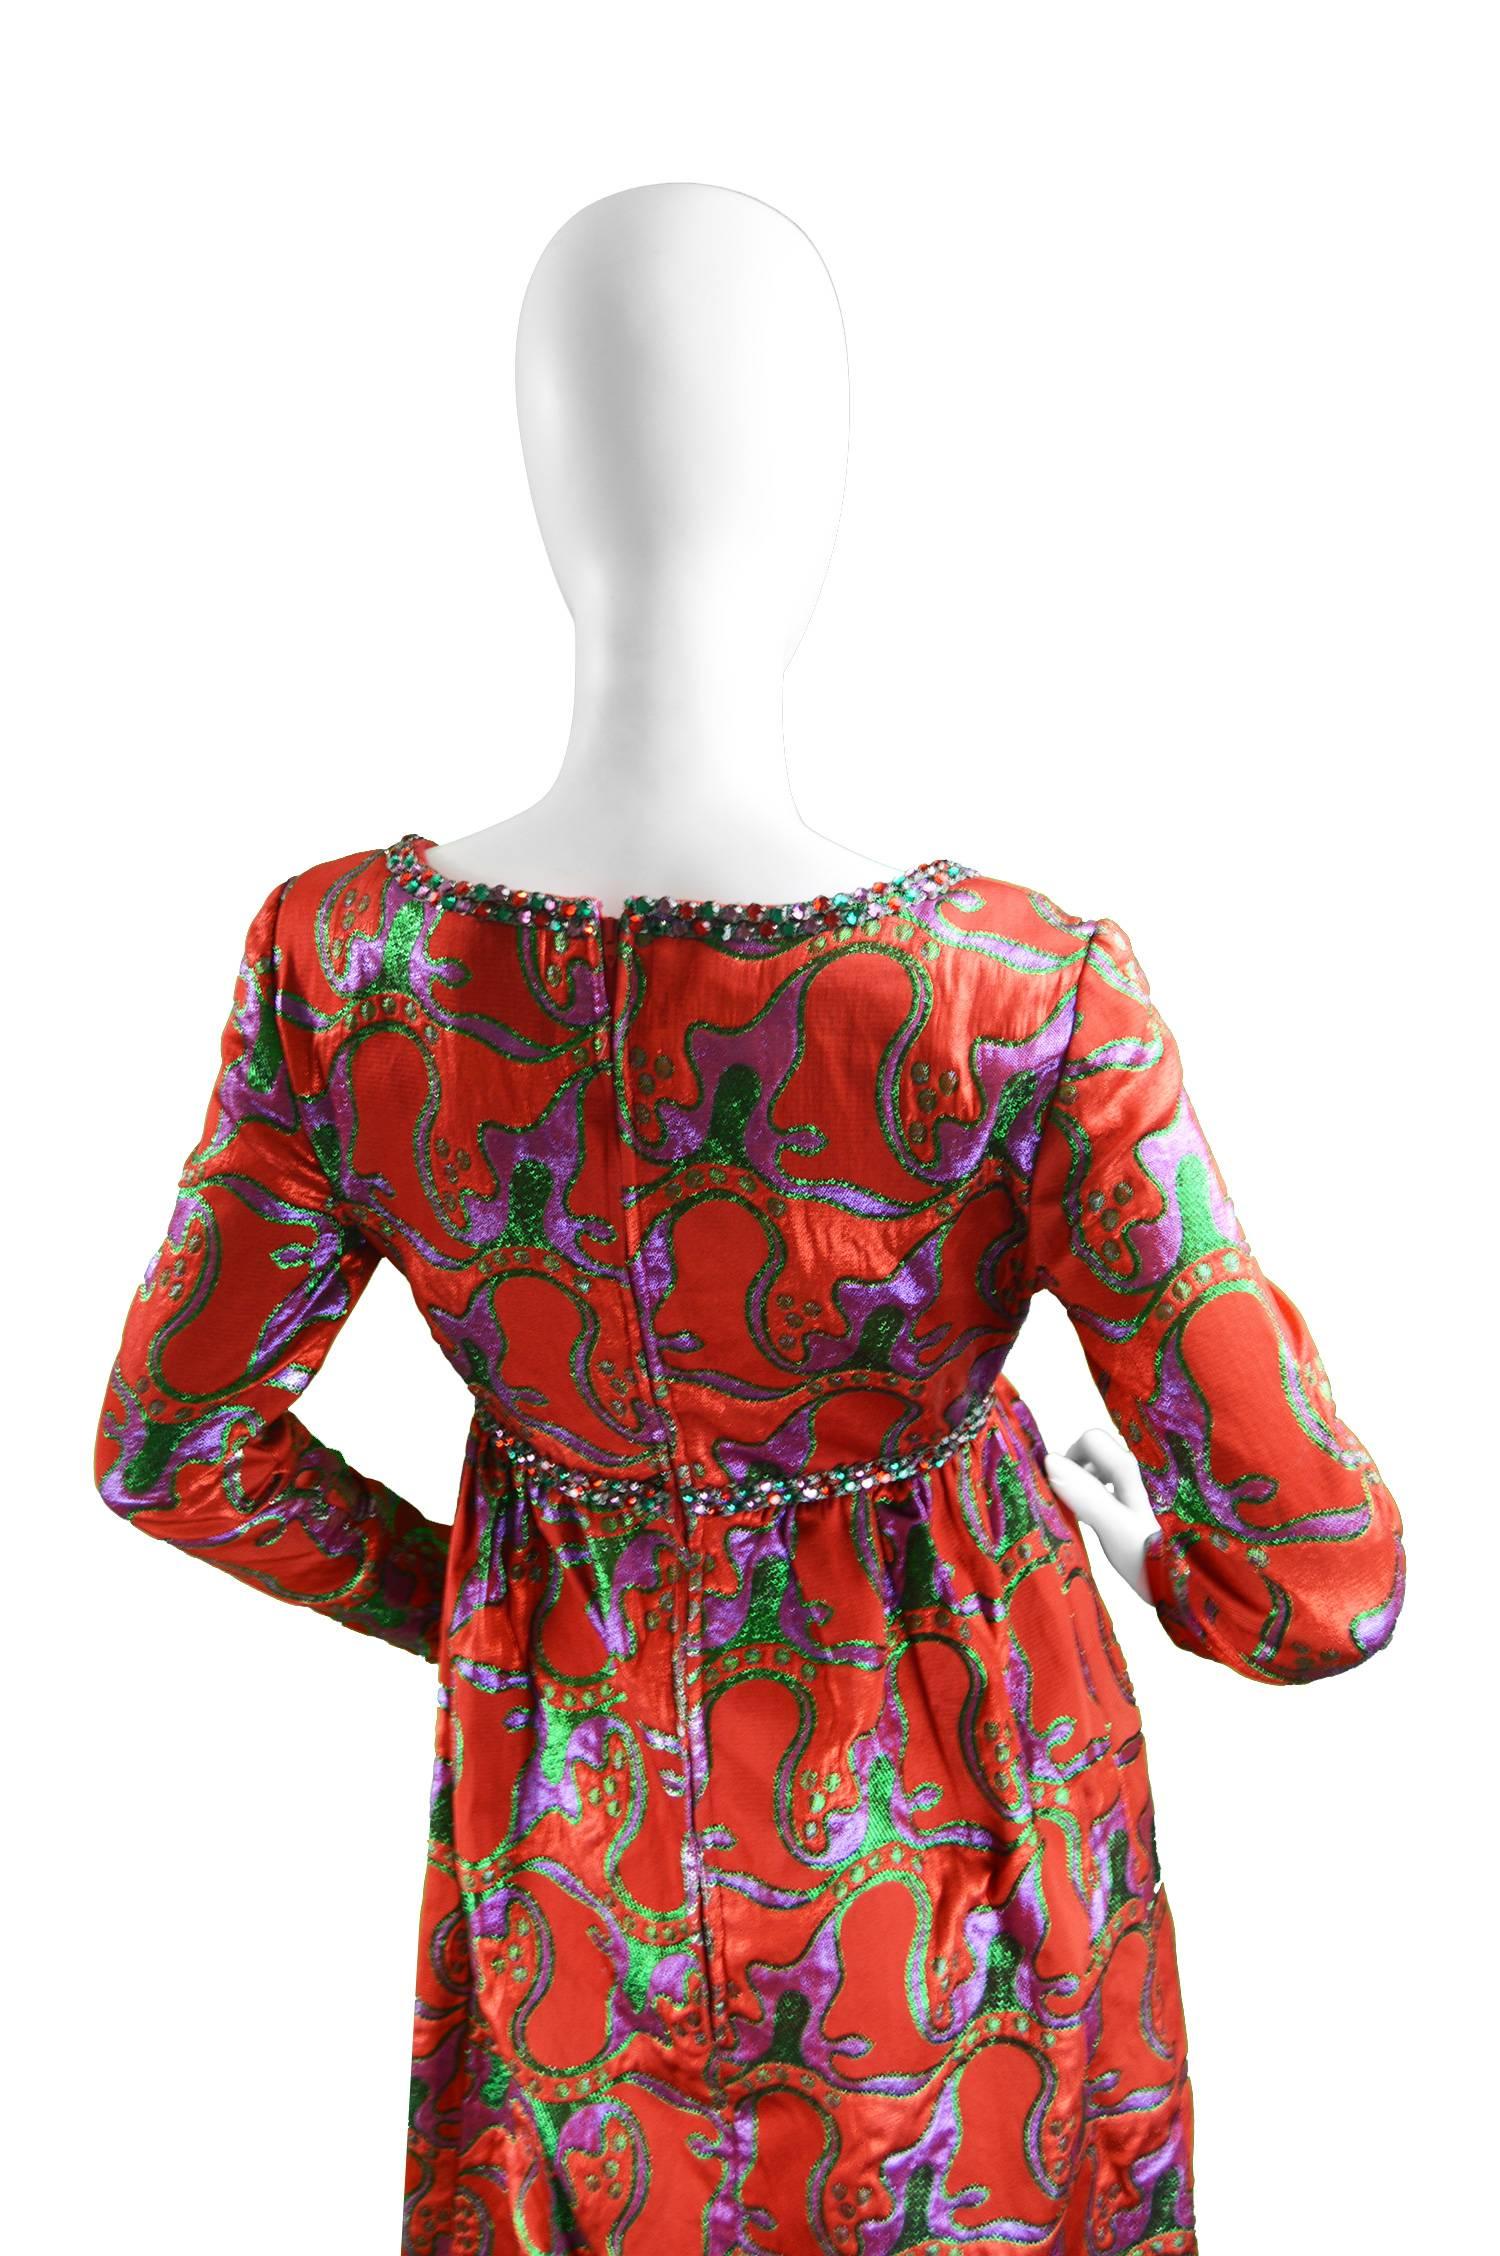 Victor Costa Romantica Red, Purple & Green Metallic Brocade Evening Dress, 1970s For Sale 2